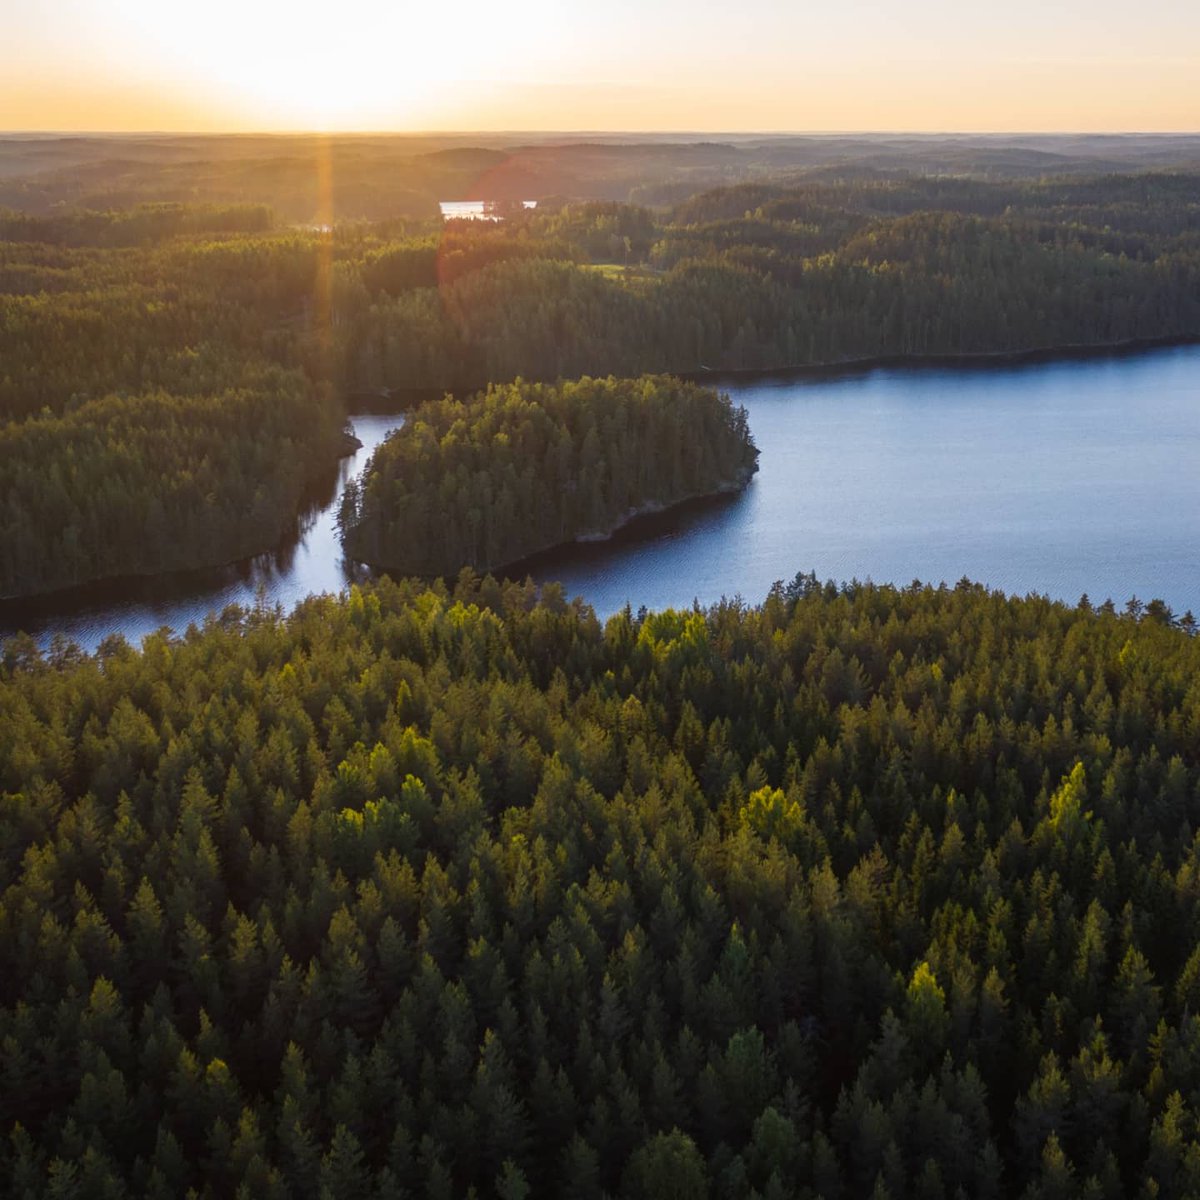 Midsummer in Repovesi National Park, Finland

#Finland #repovesi #Suomi #juhannus #luonto #nature #dronephotography #drone #hiking #north #dji